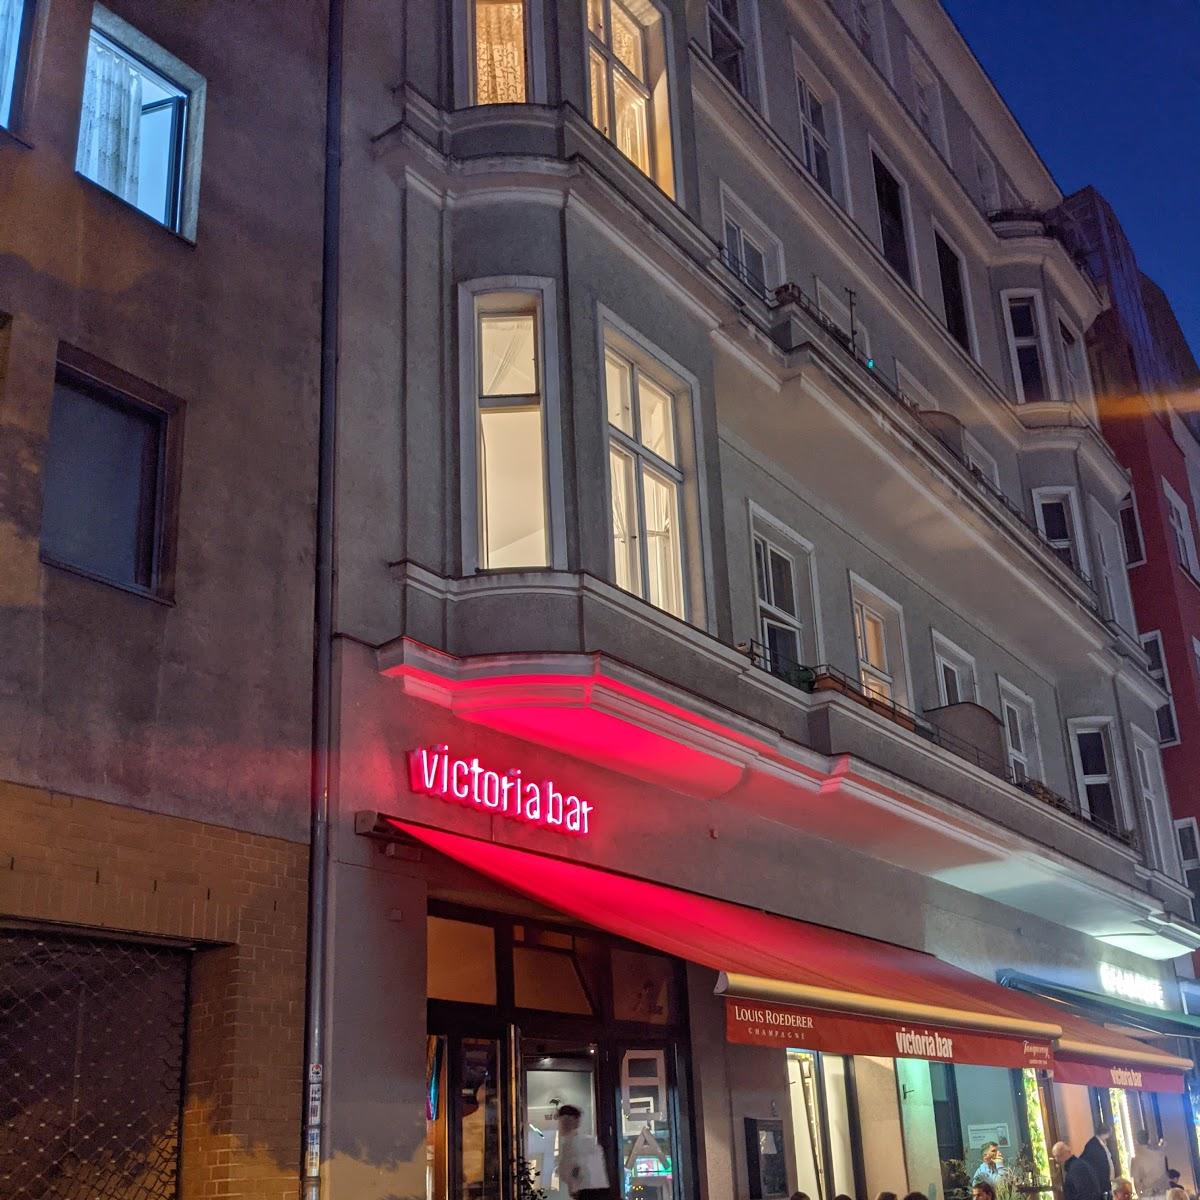 Restaurant "Victoria Bar" in Berlin